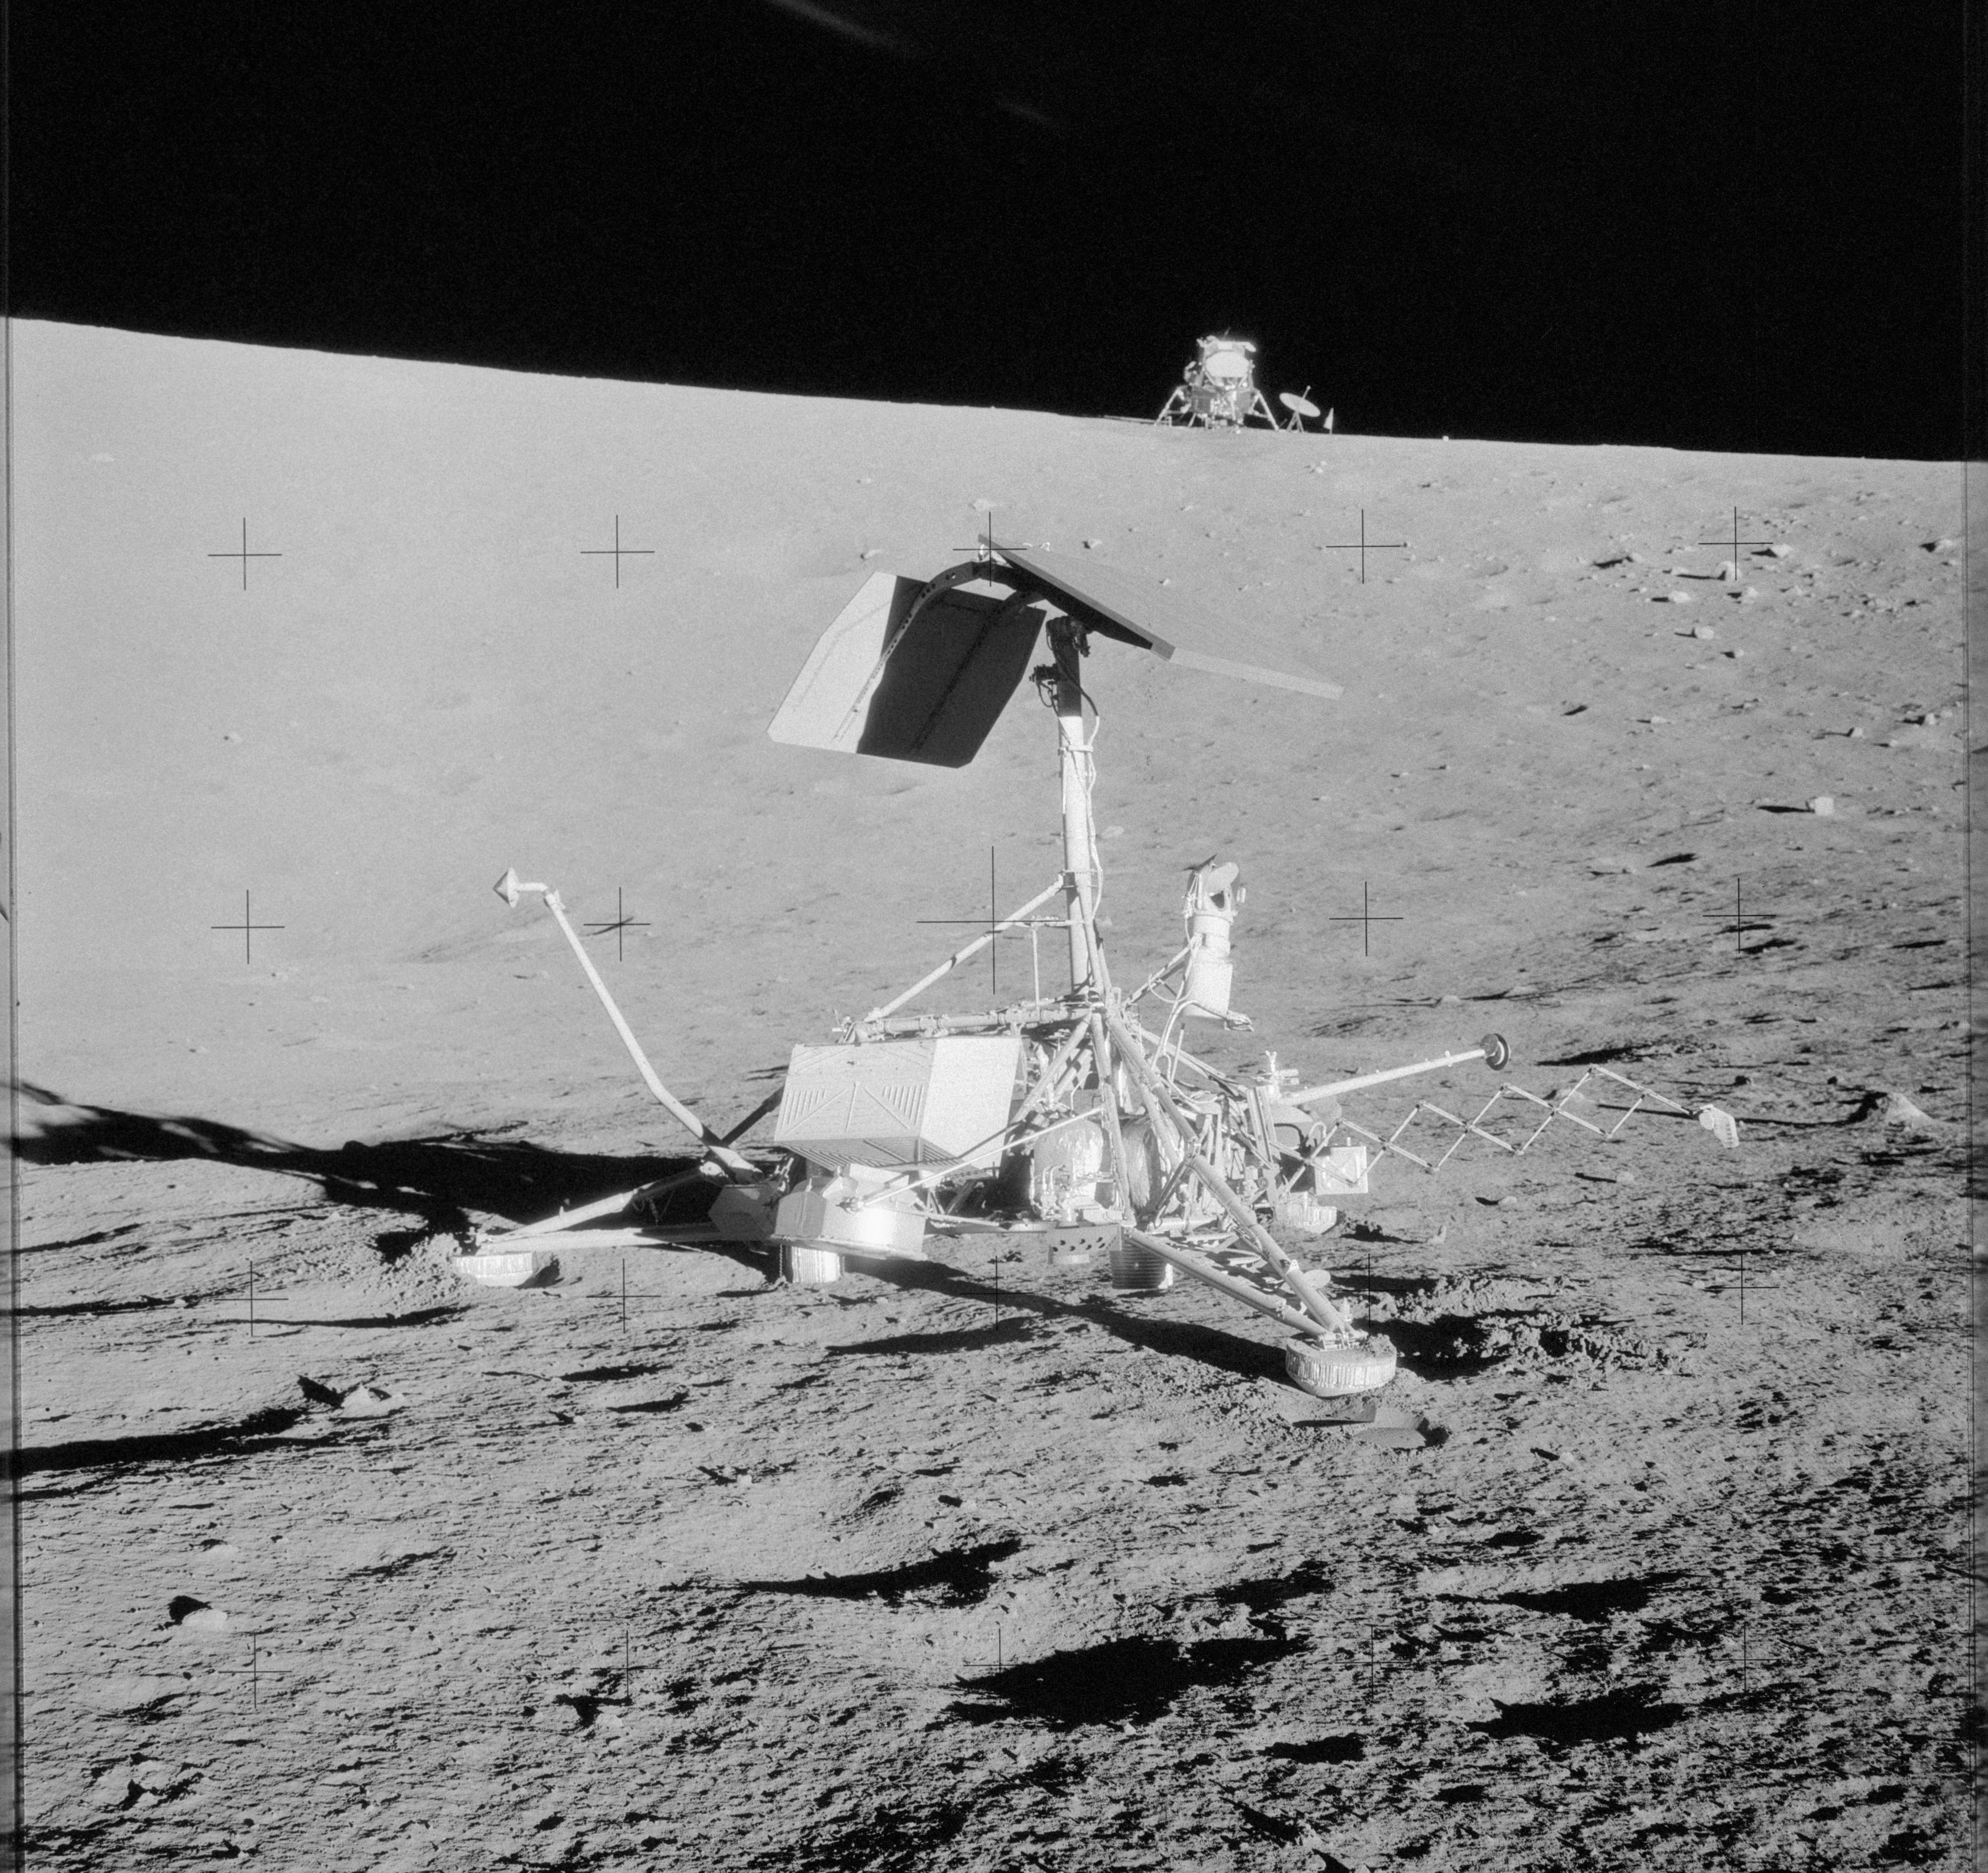 Surveyor 3 on the Moon, with the Apollo 12 Lunar Module in the background.  (Photo: NASA)